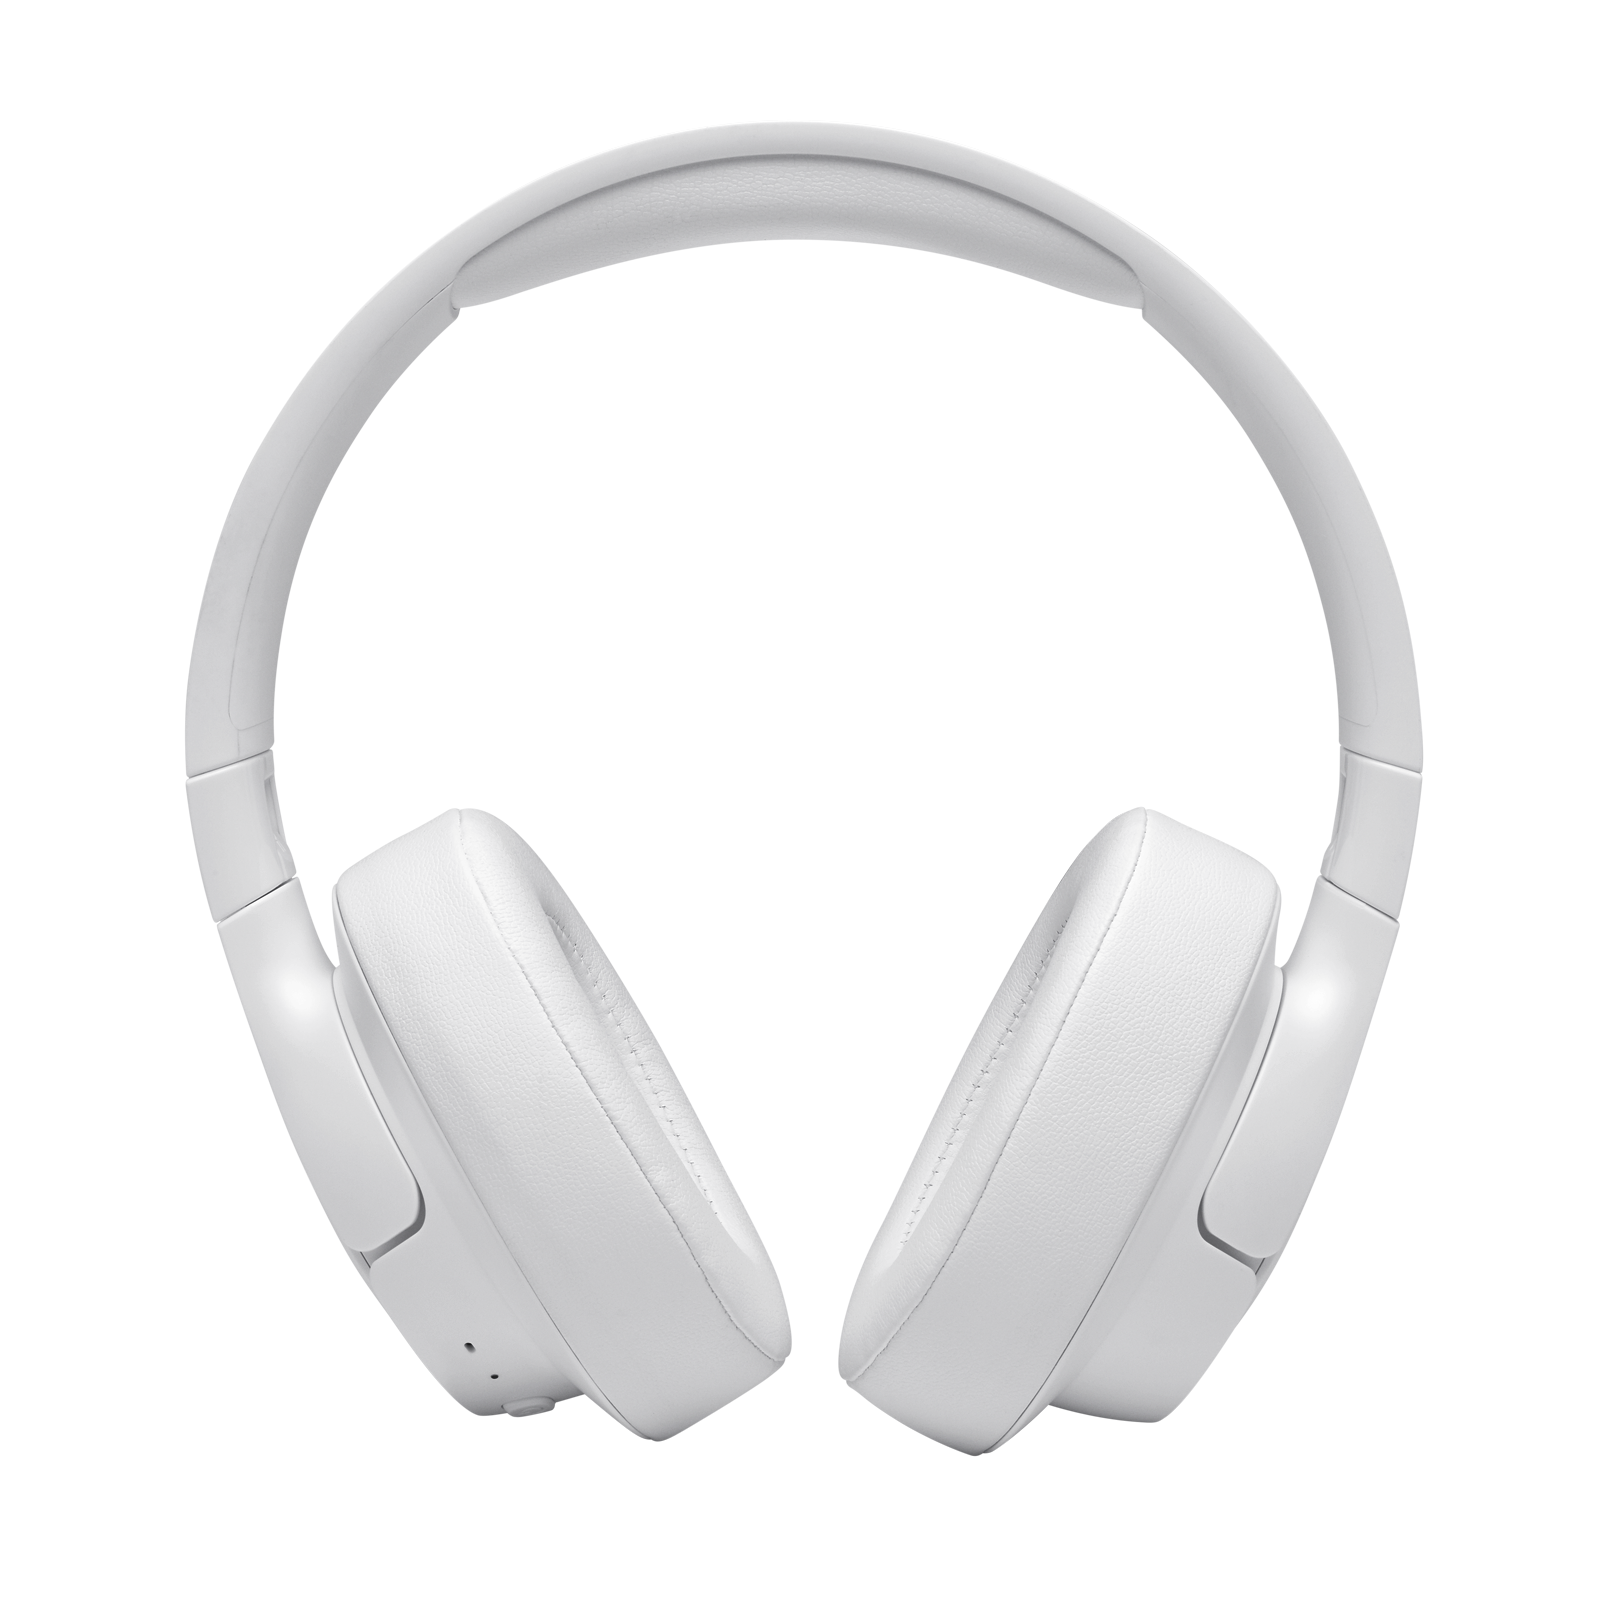 JBL Tune 710BT - White - Wireless Over-Ear Headphones - Front